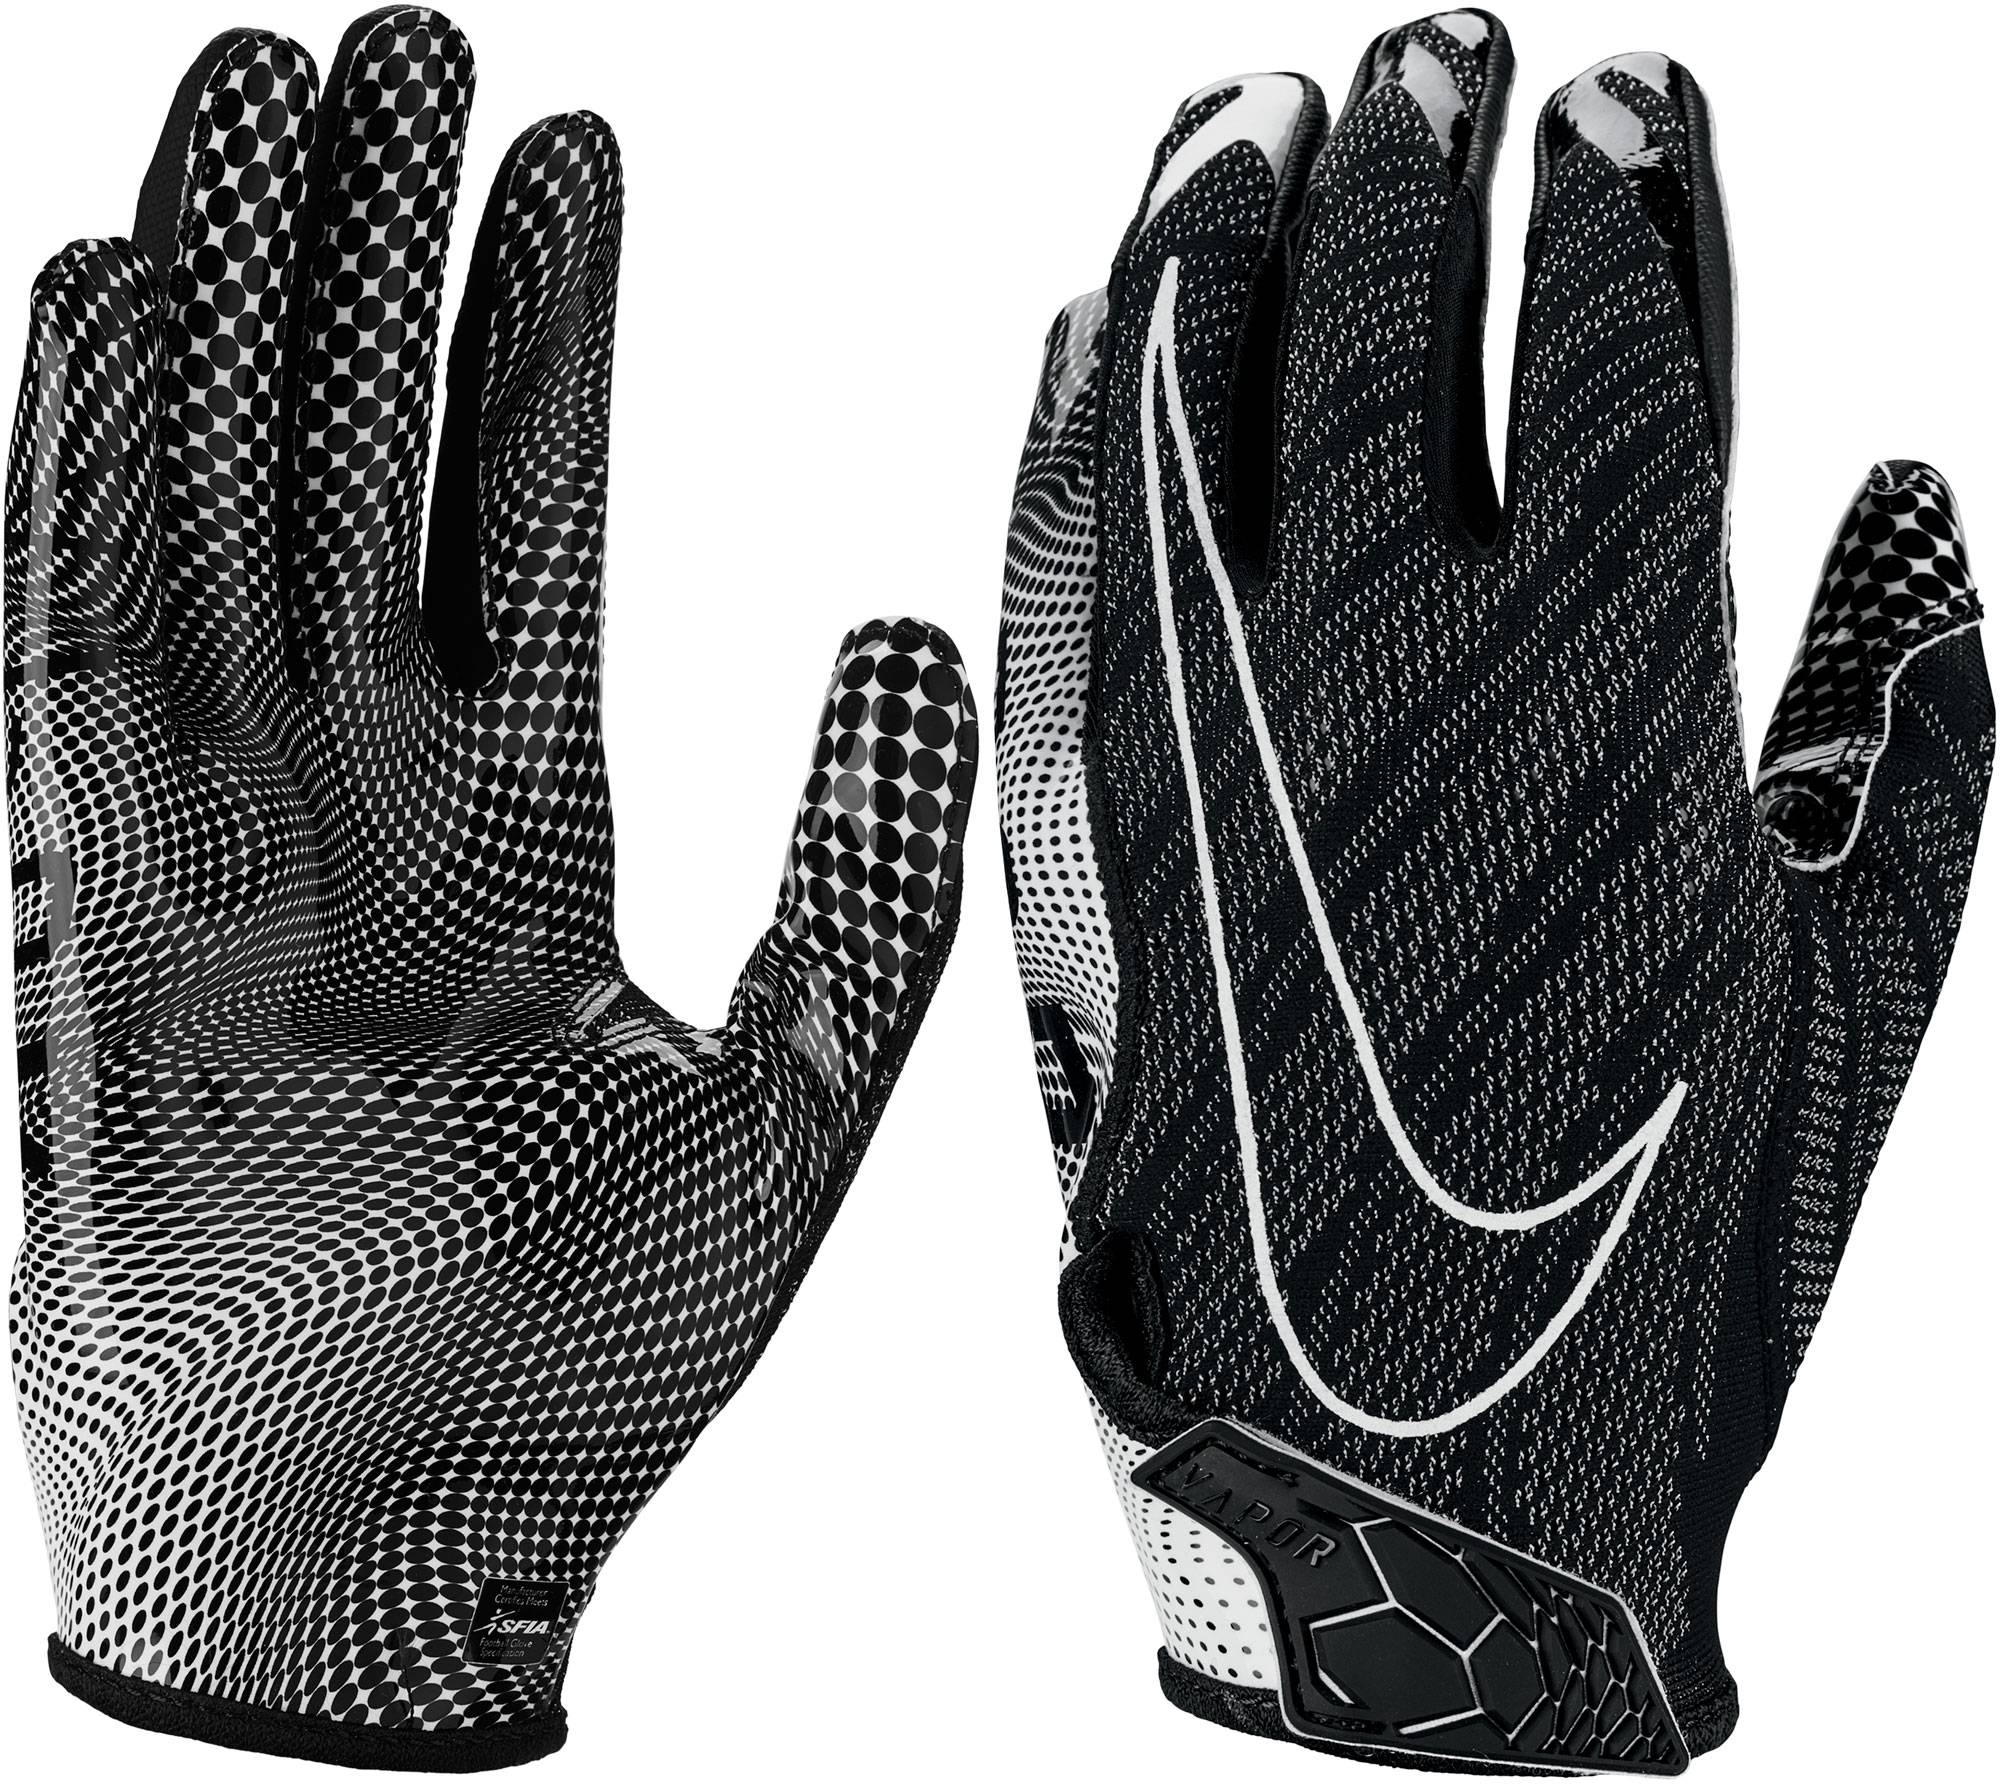 Nike Vapor Knit 3.0 - Black | TEAMZONE 